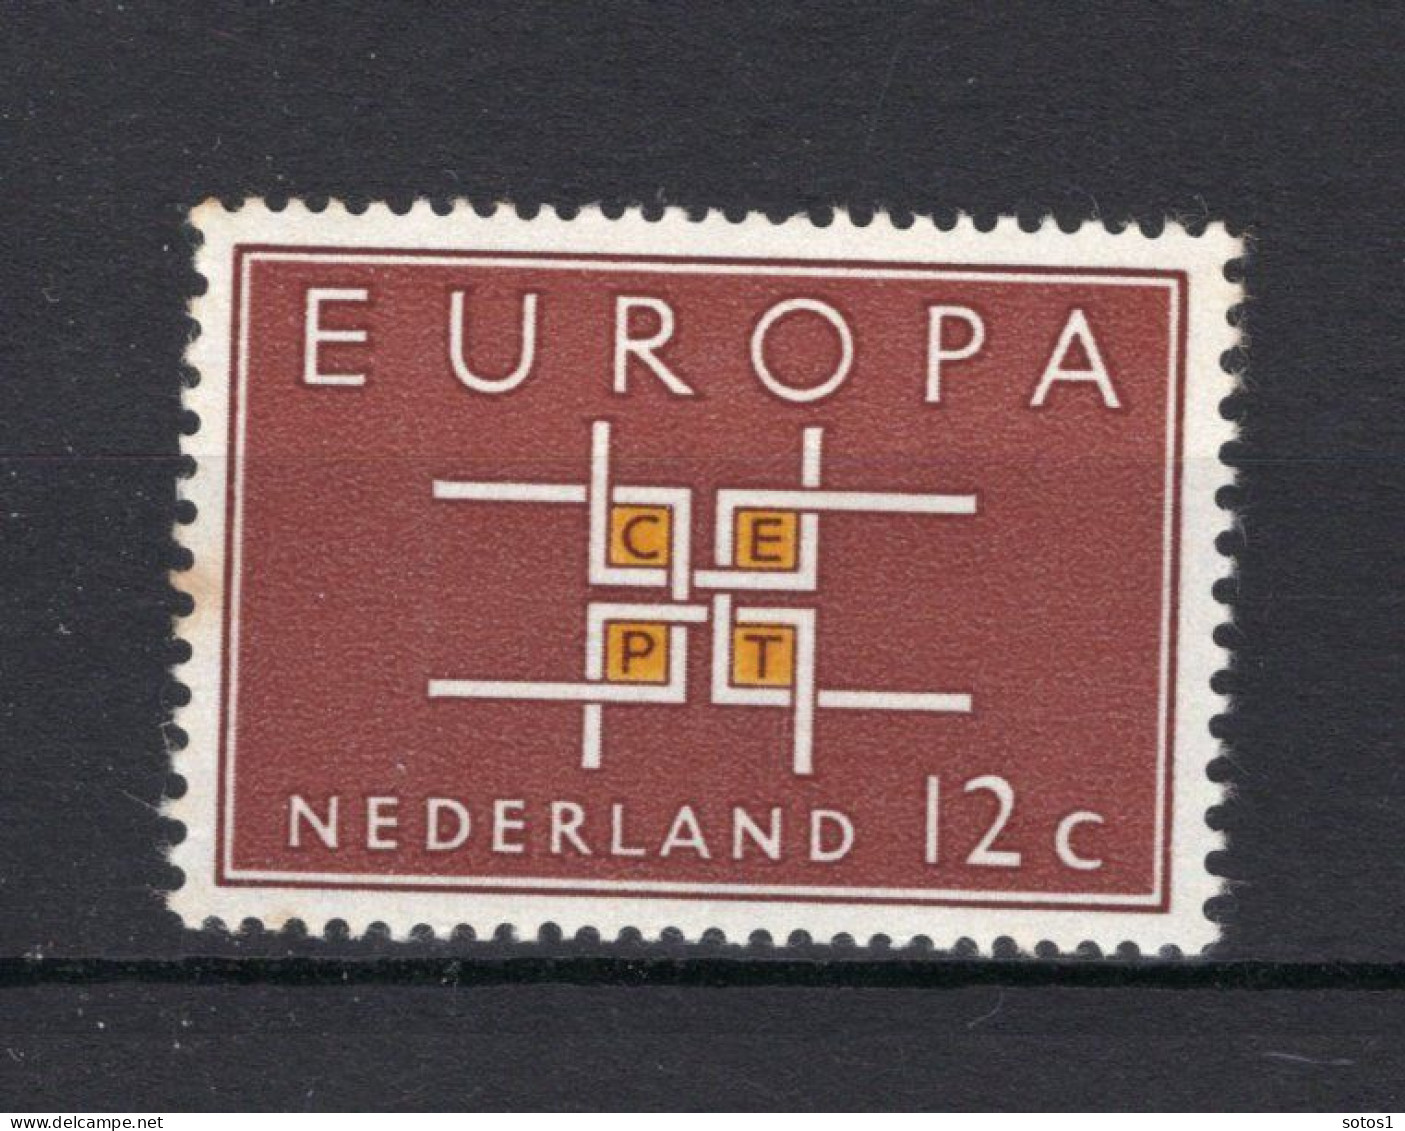 NEDERLAND 800 MNH 1963 - Europa CEPT - Neufs